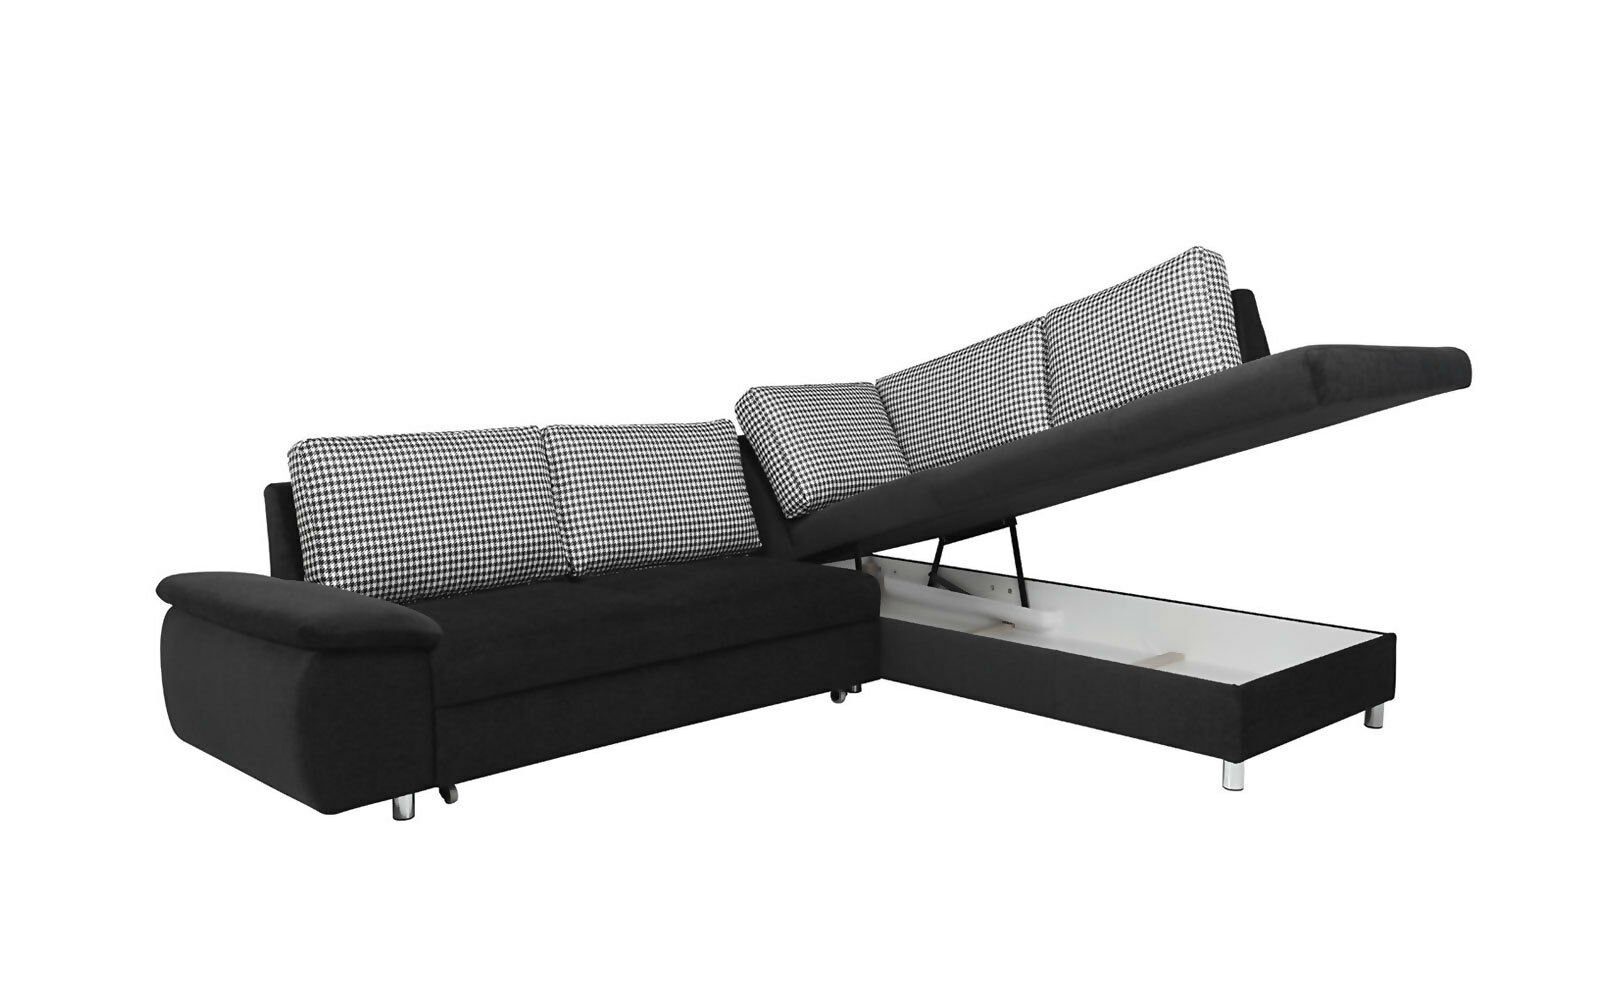 Ecksitzmöbel Ecksofa Stilvoll, Schwarzes Luxus Moderne Europe in JVmoebel Ecksofa Couch Made